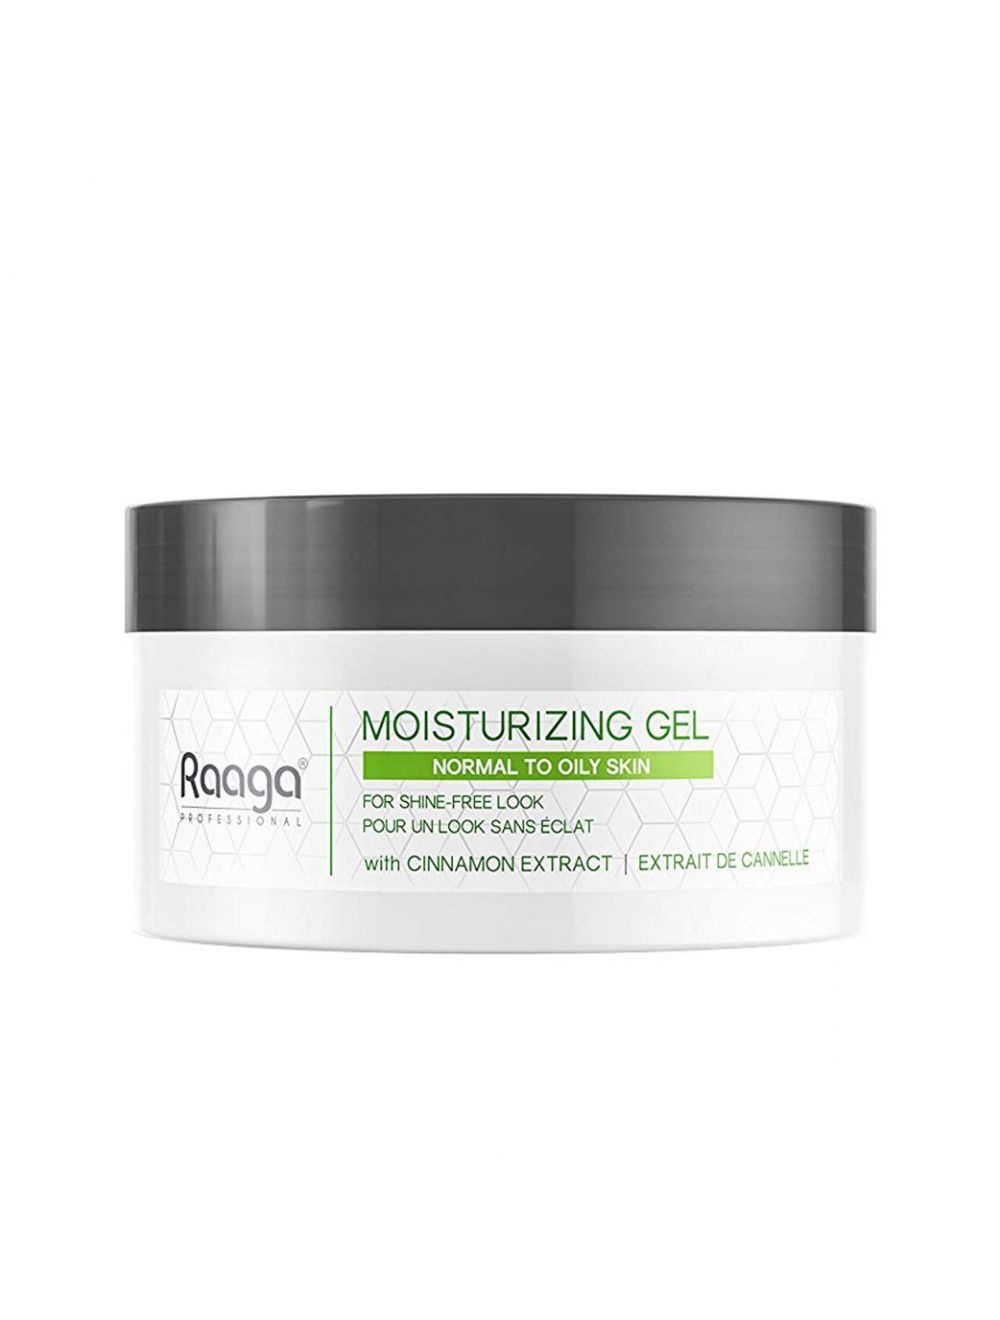 Raaga Professional Moisturizing Gel for Normal to Oily Skin (50gm)